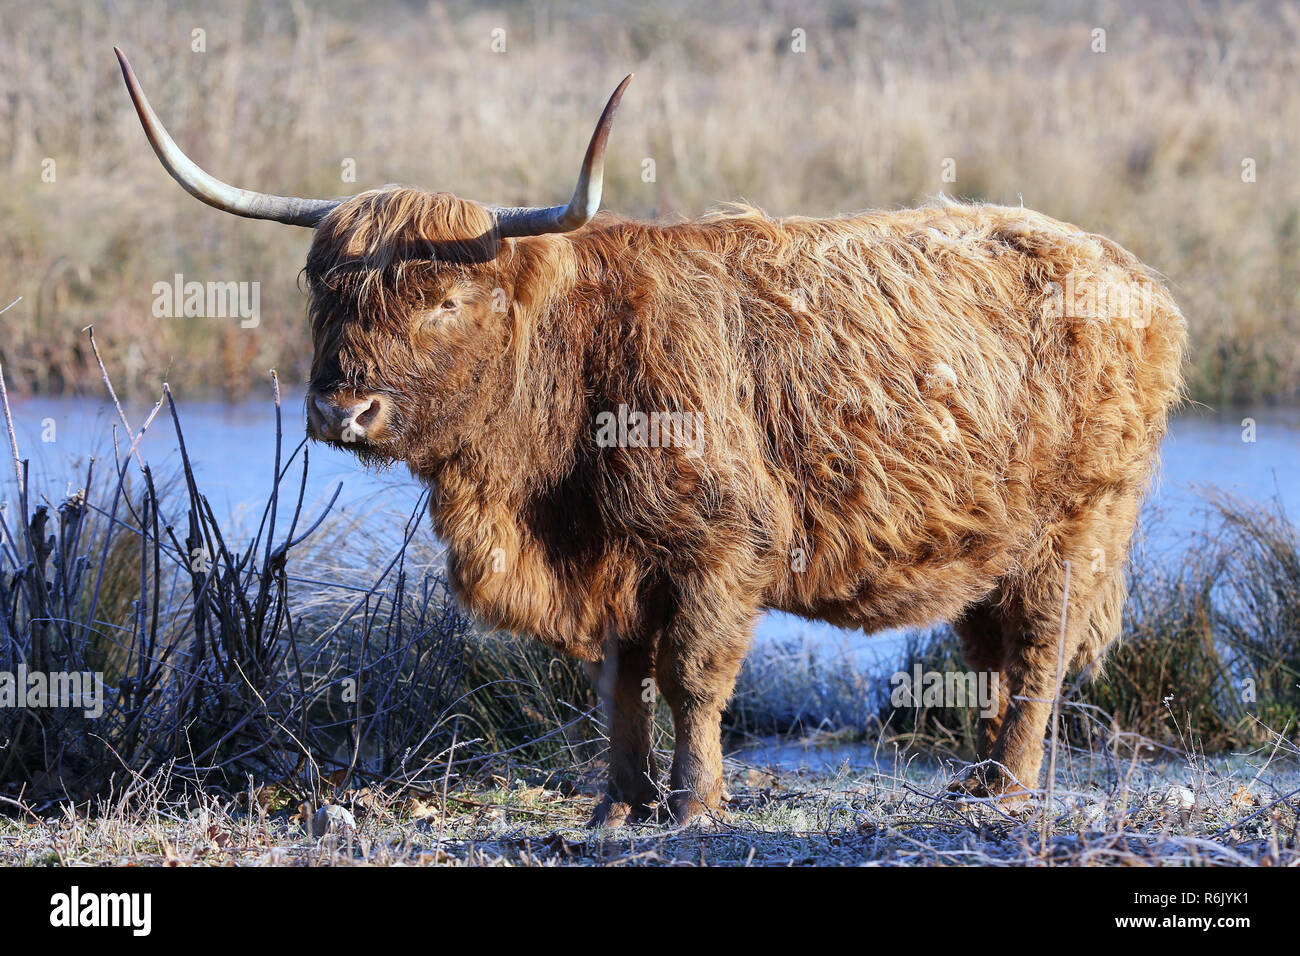 scottish highland cattle kyloe at the waterhole in winter Stock Photo